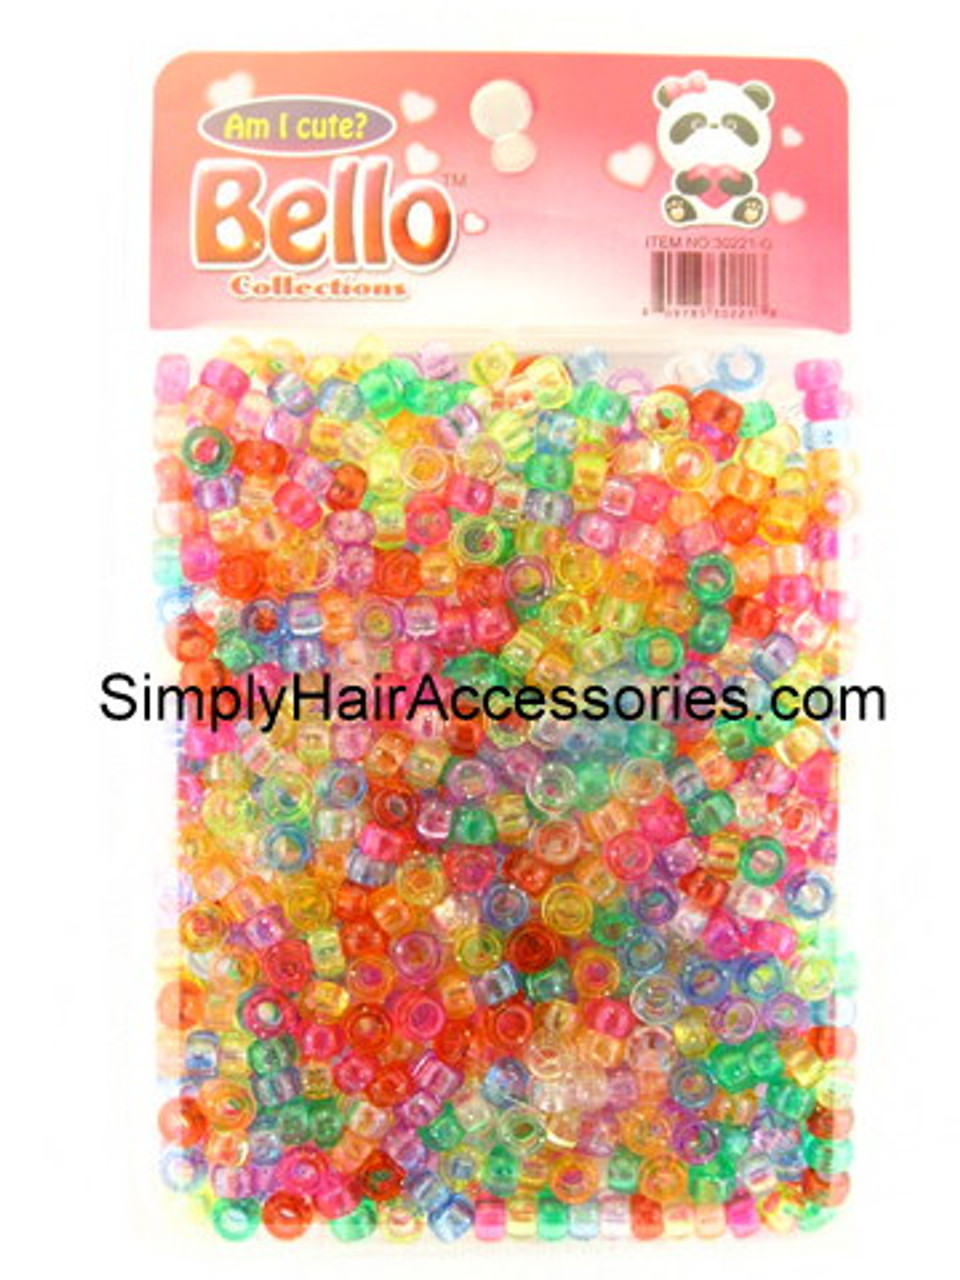 Bello Pony Braiding Hair Beads - Approximately 700 Pcs.